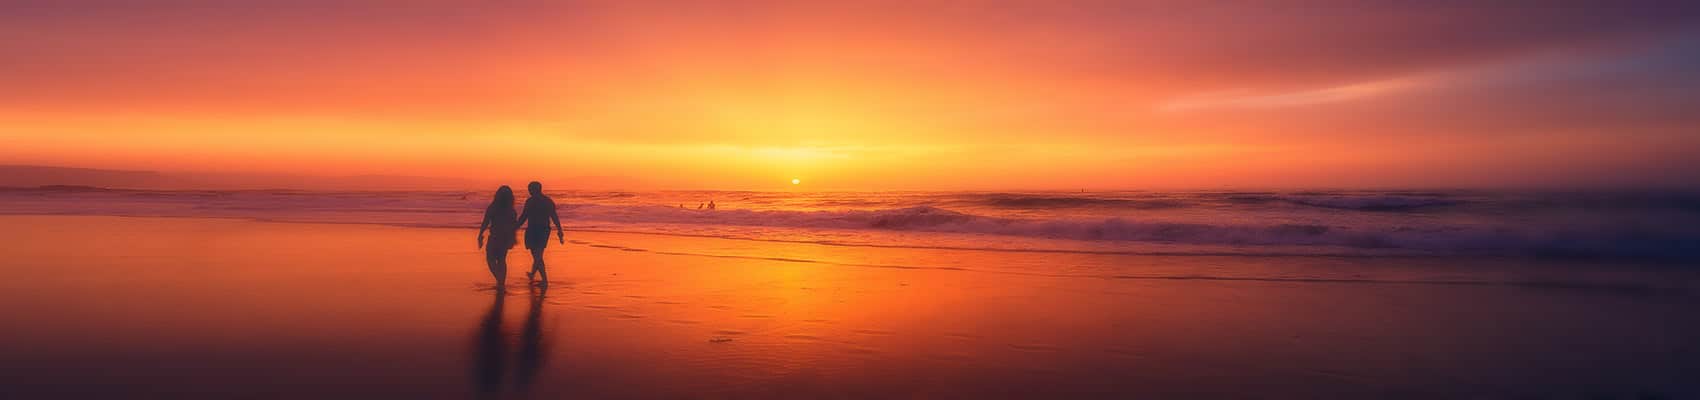 Cape Cod Sunset Walk on Beach